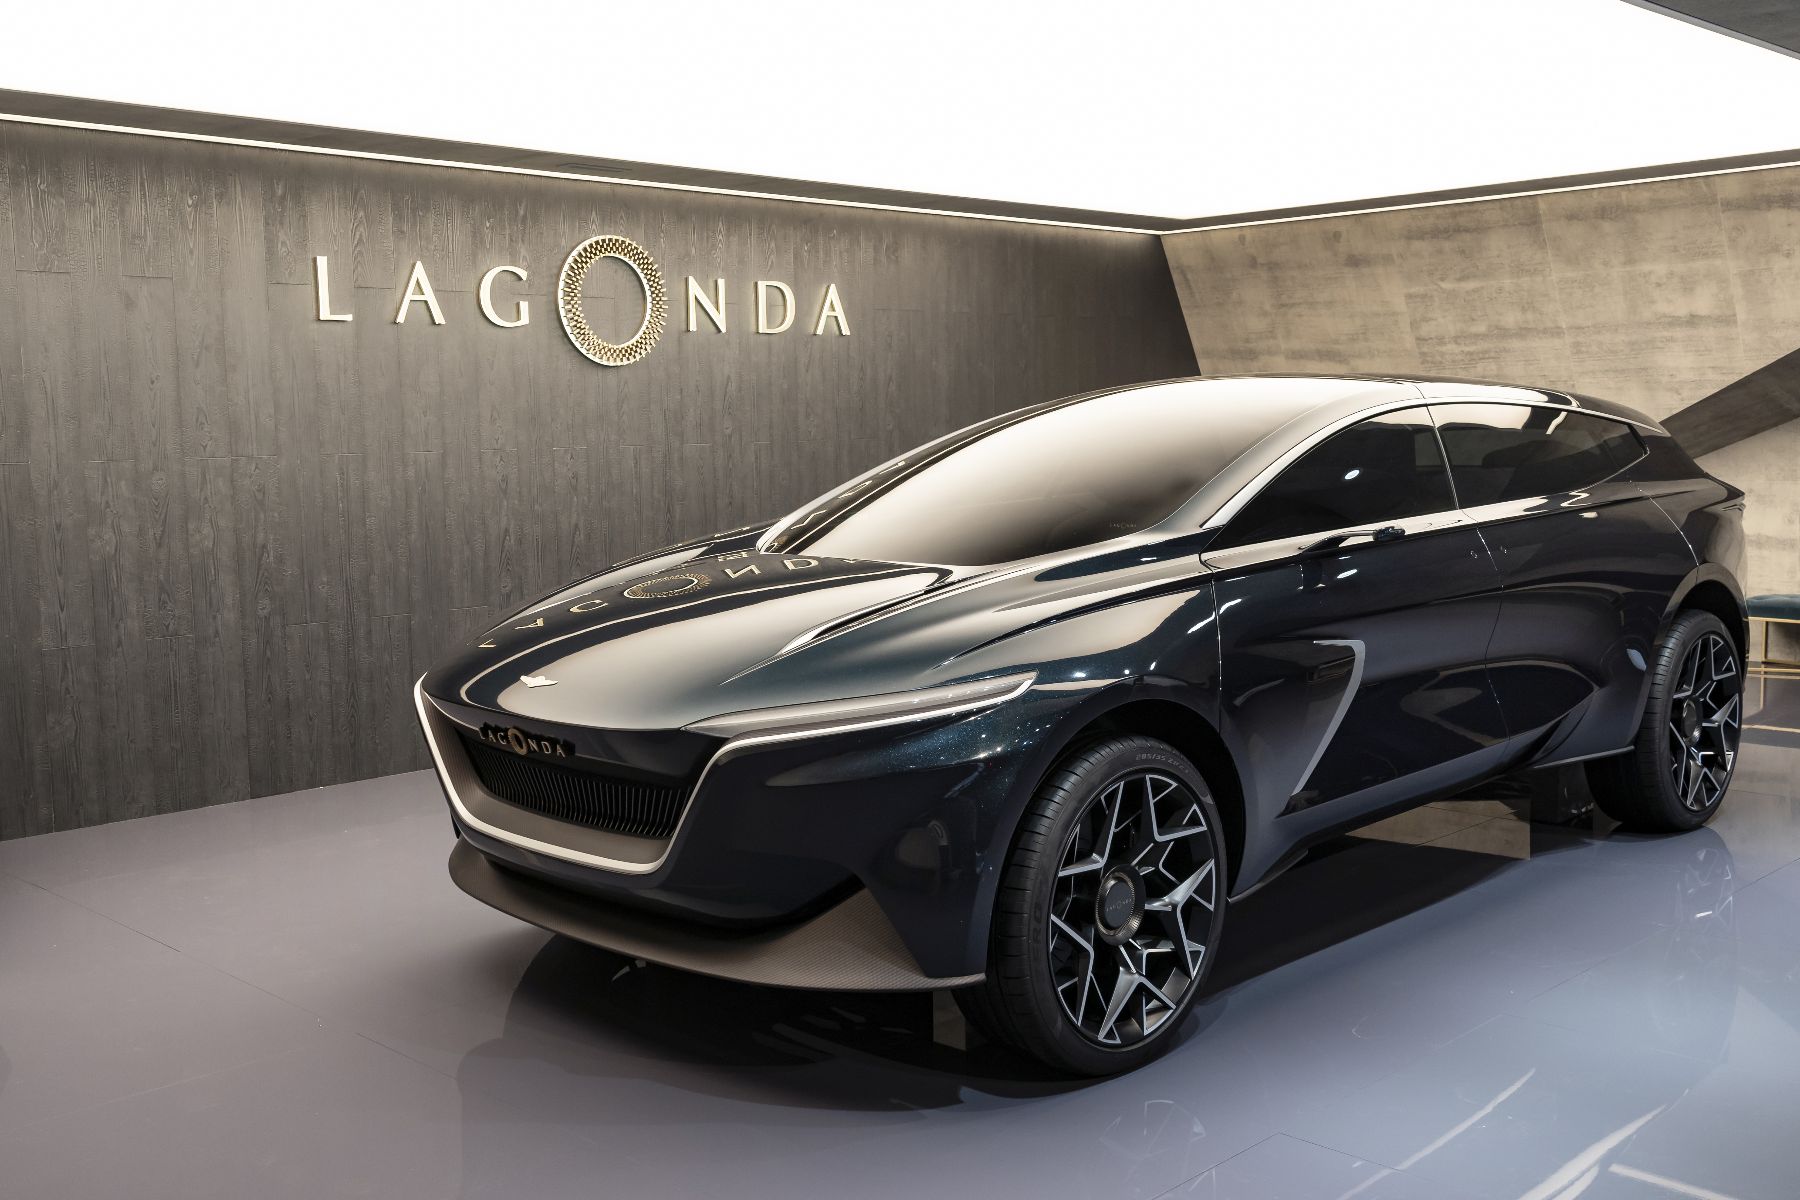 Aston Martin Lagonda All Terrain Electric Car 2020 Rumors